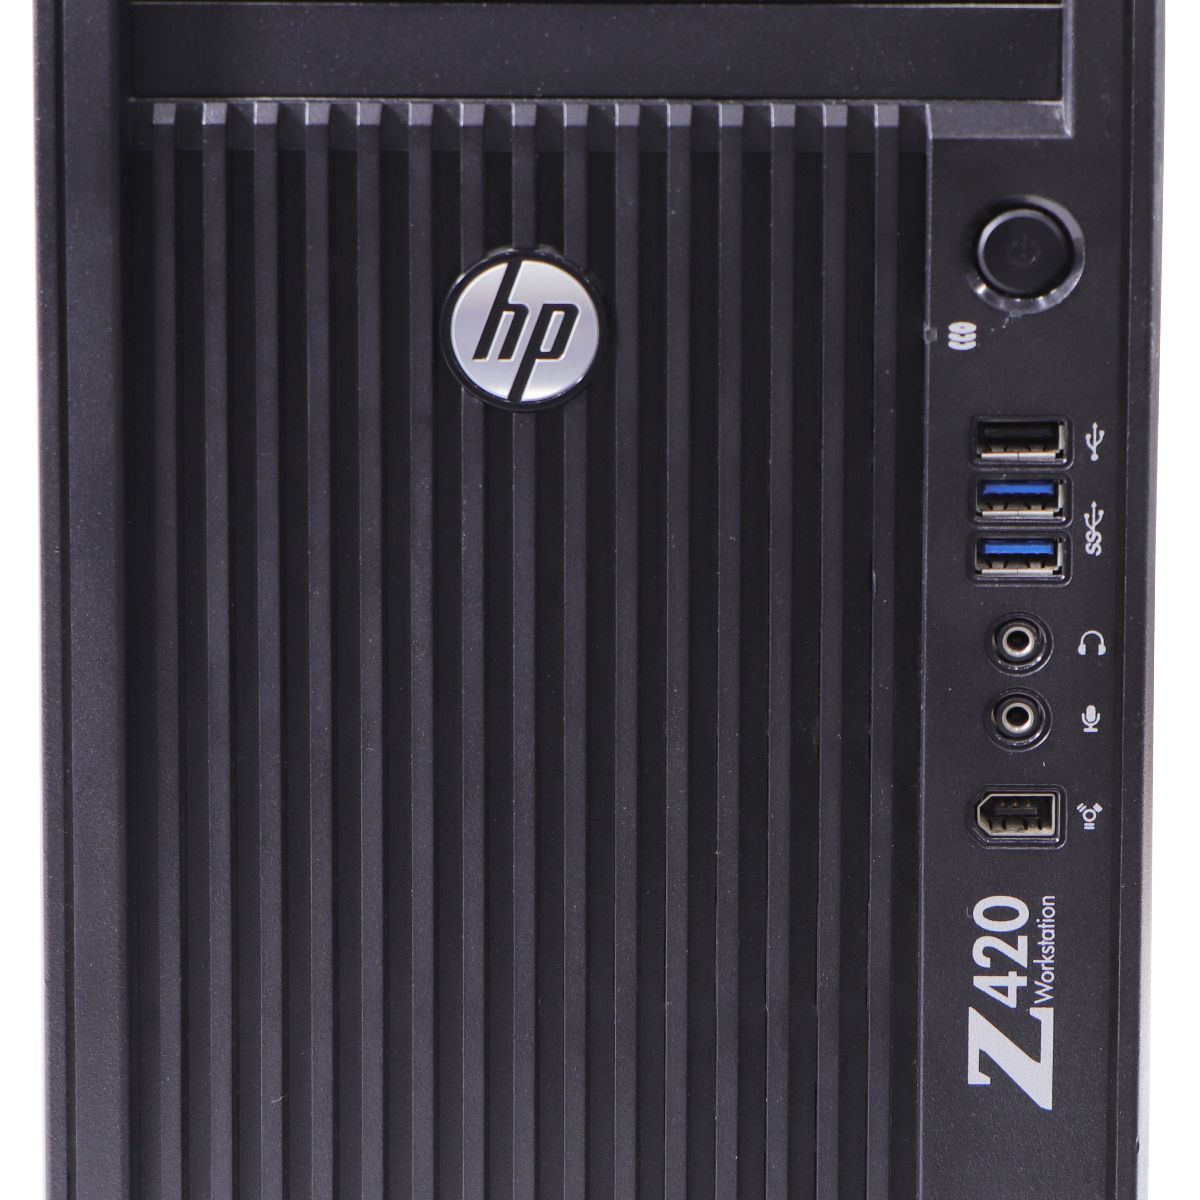 HP Z420 WorkStation Desktop PC (D8D10UT) E5-1607/K600/500GB HDD/8GB/10 Home PC Desktops & All-In-Ones HP    - Simple Cell Bulk Wholesale Pricing - USA Seller